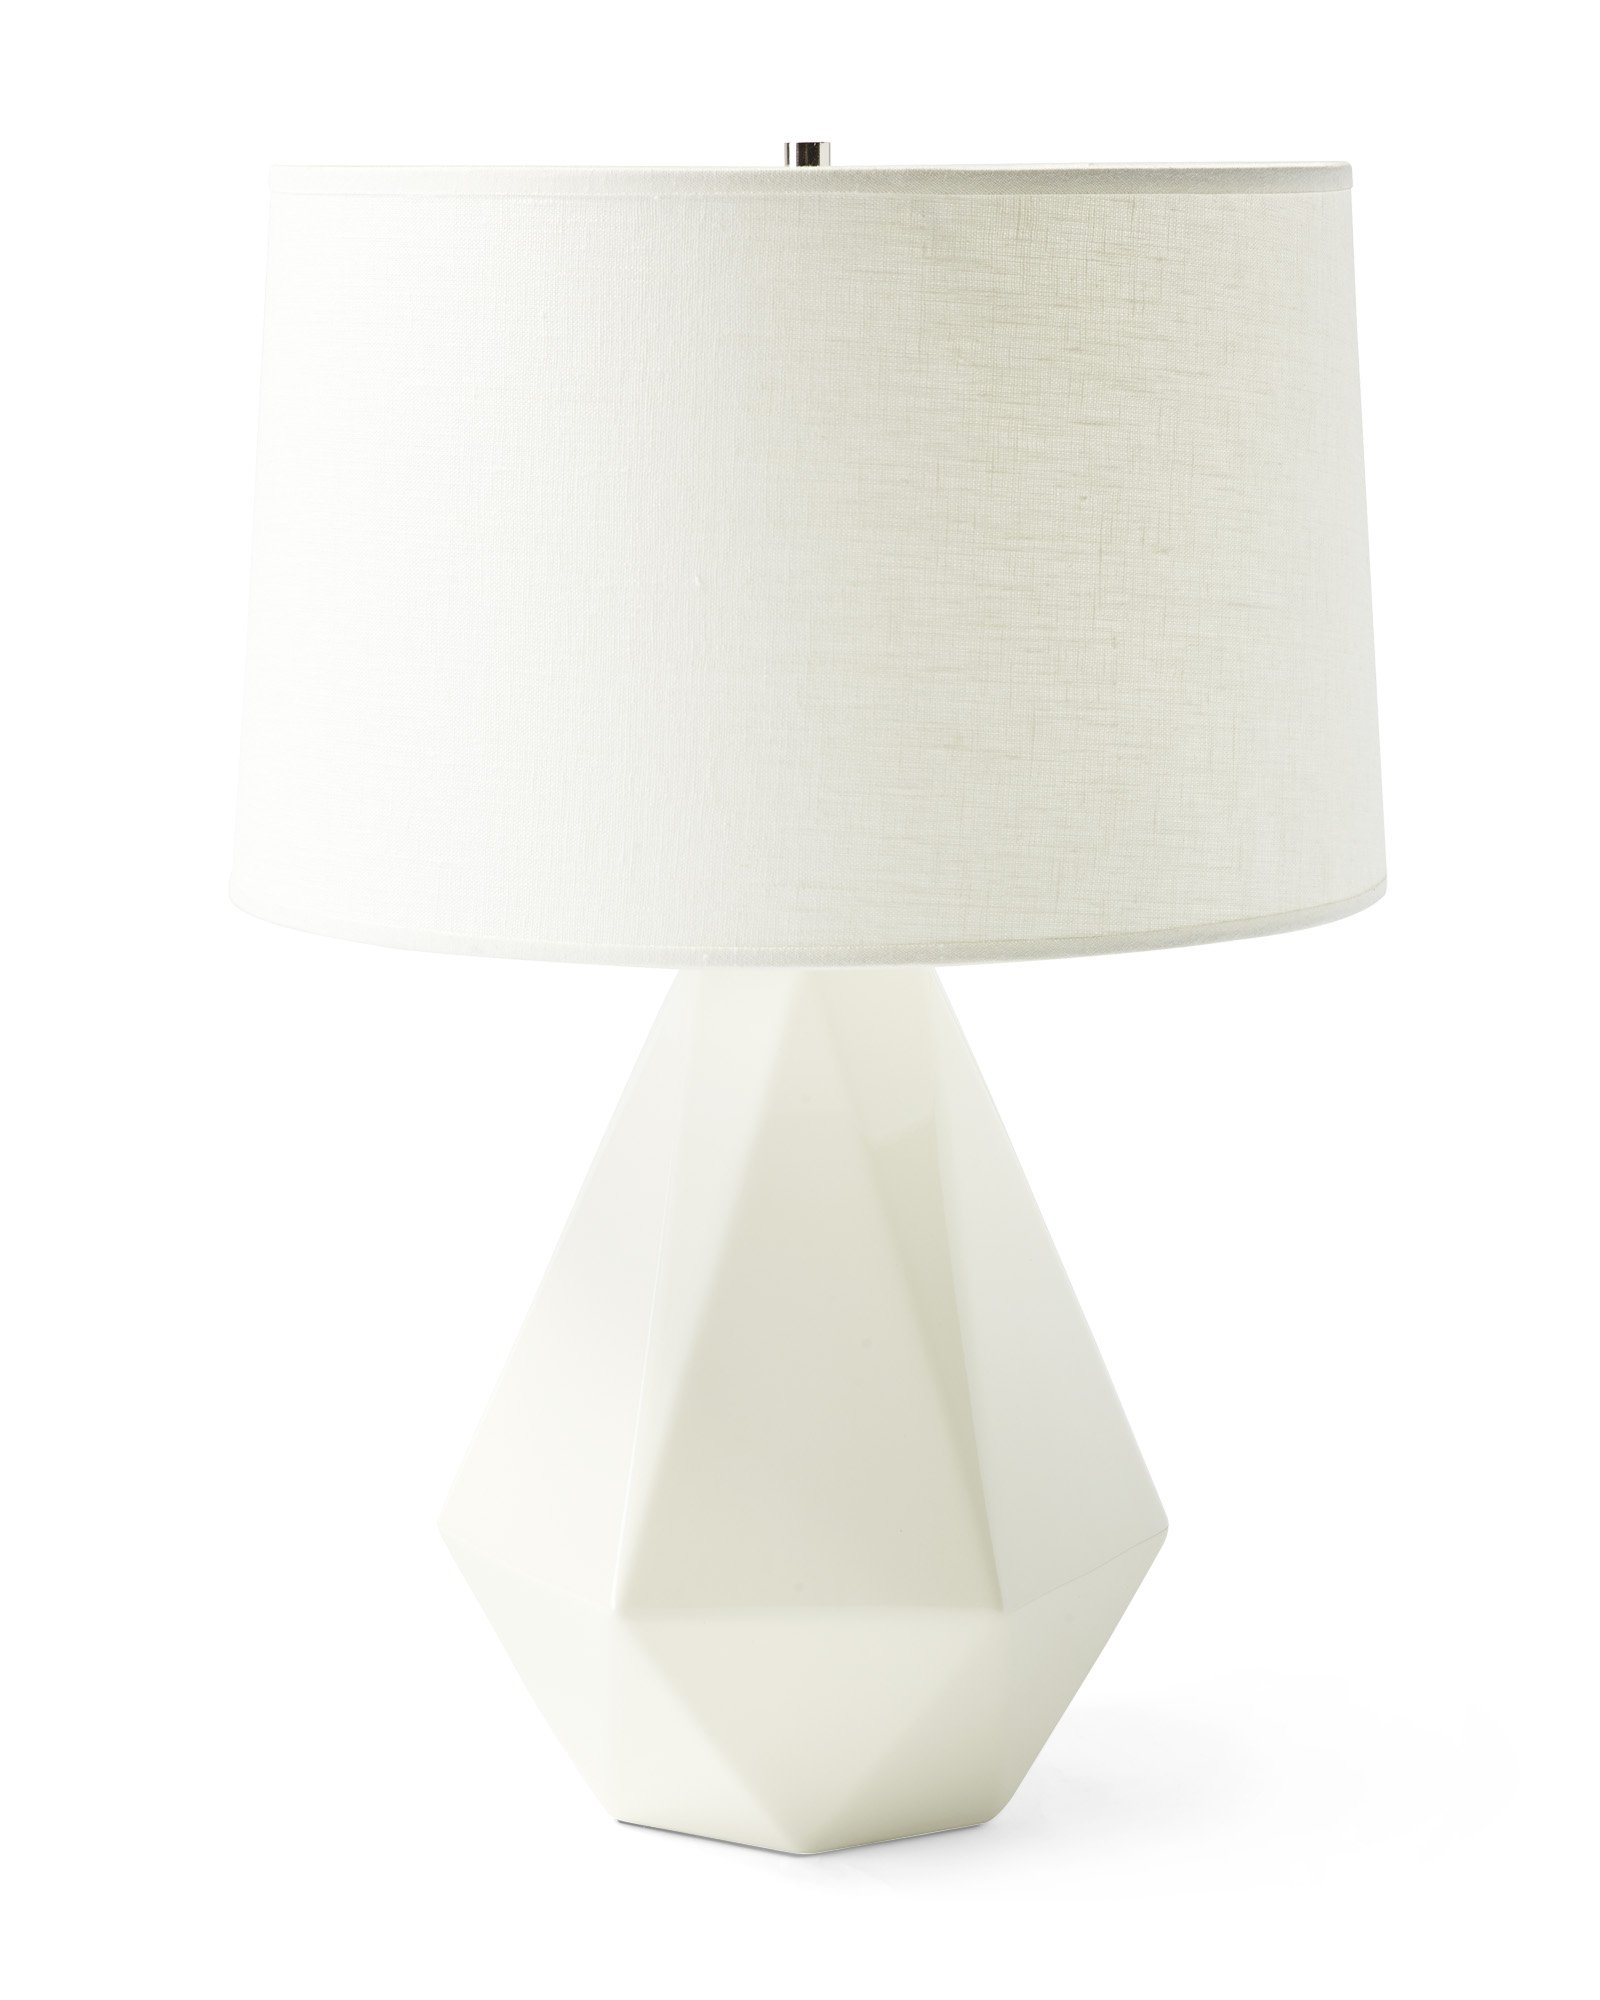 emory table lamp - white - Image 0